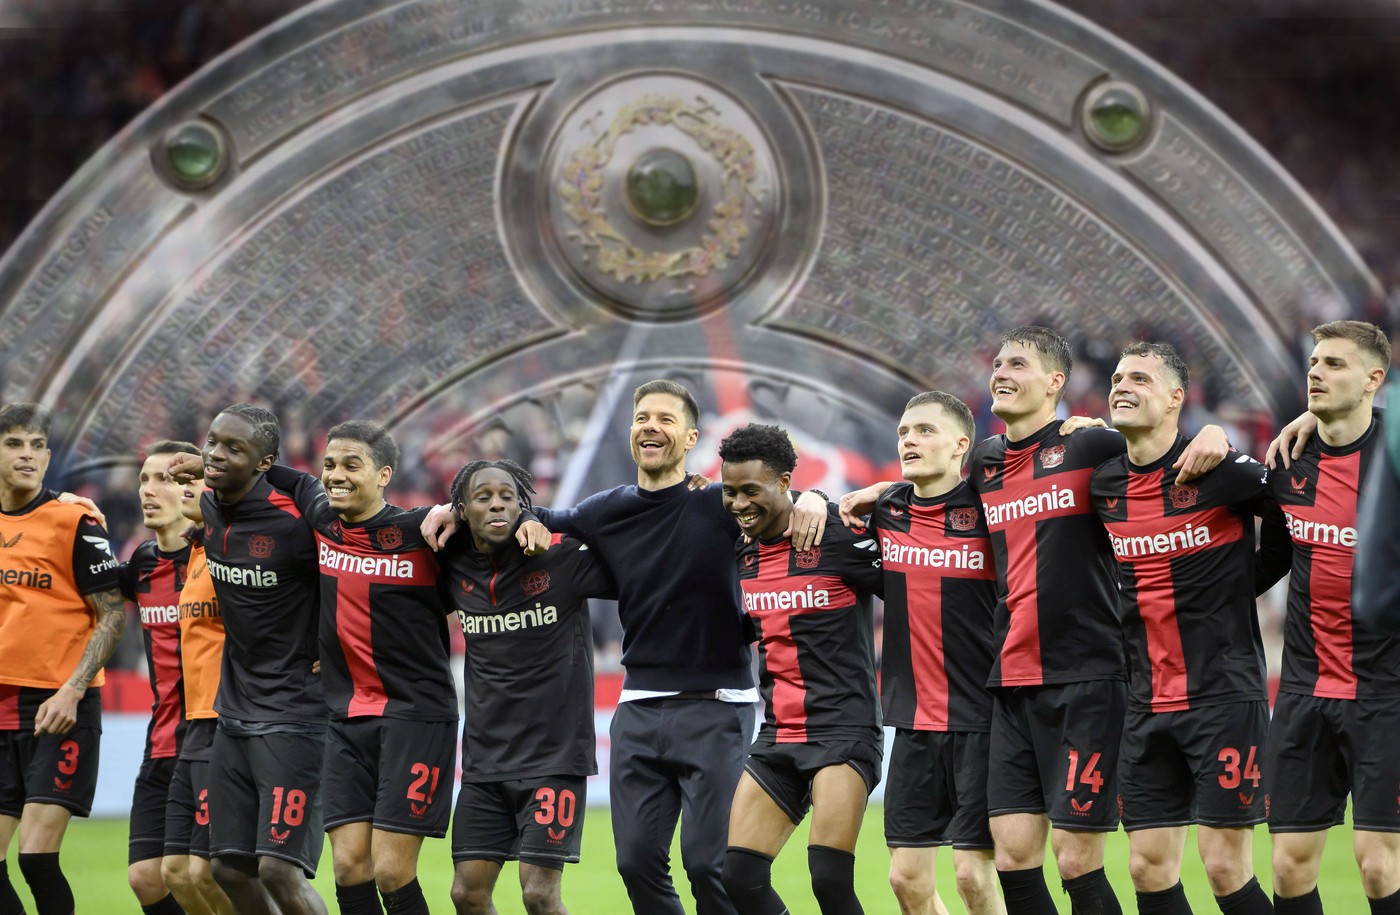 Bayer Leverkusen - Werder Bremen, LIVE VIDEO, 18:30, Digi Sport 4. ”Farmaciștii” pot câștiga primul lor titlu din istorie